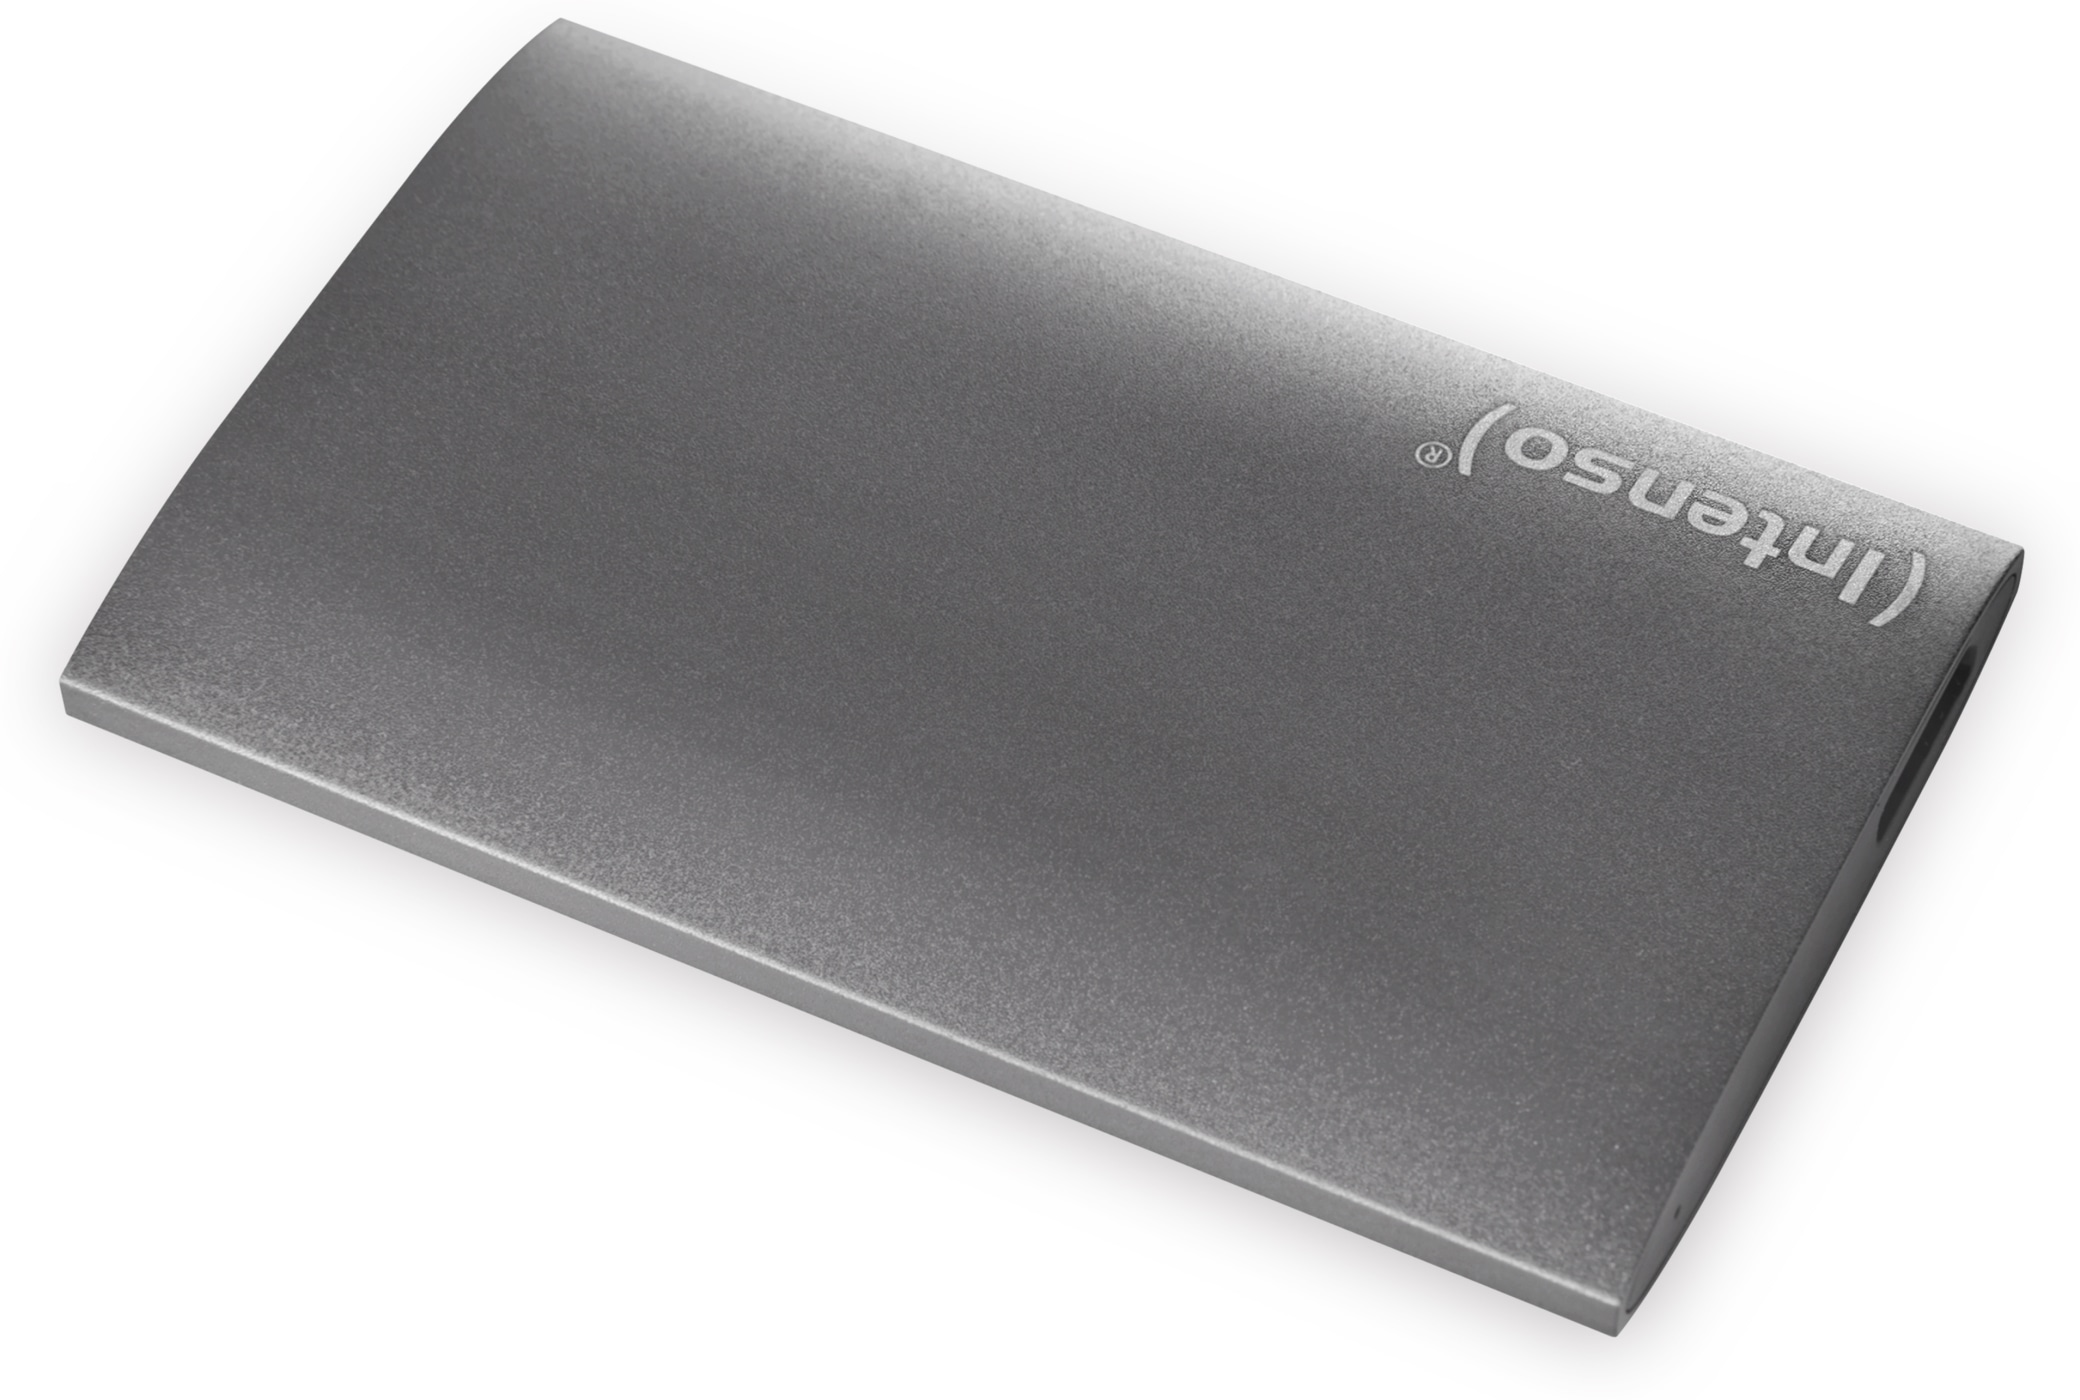 INTENSO USB 3.0-SSD Portable Premium Edition, 128 GB